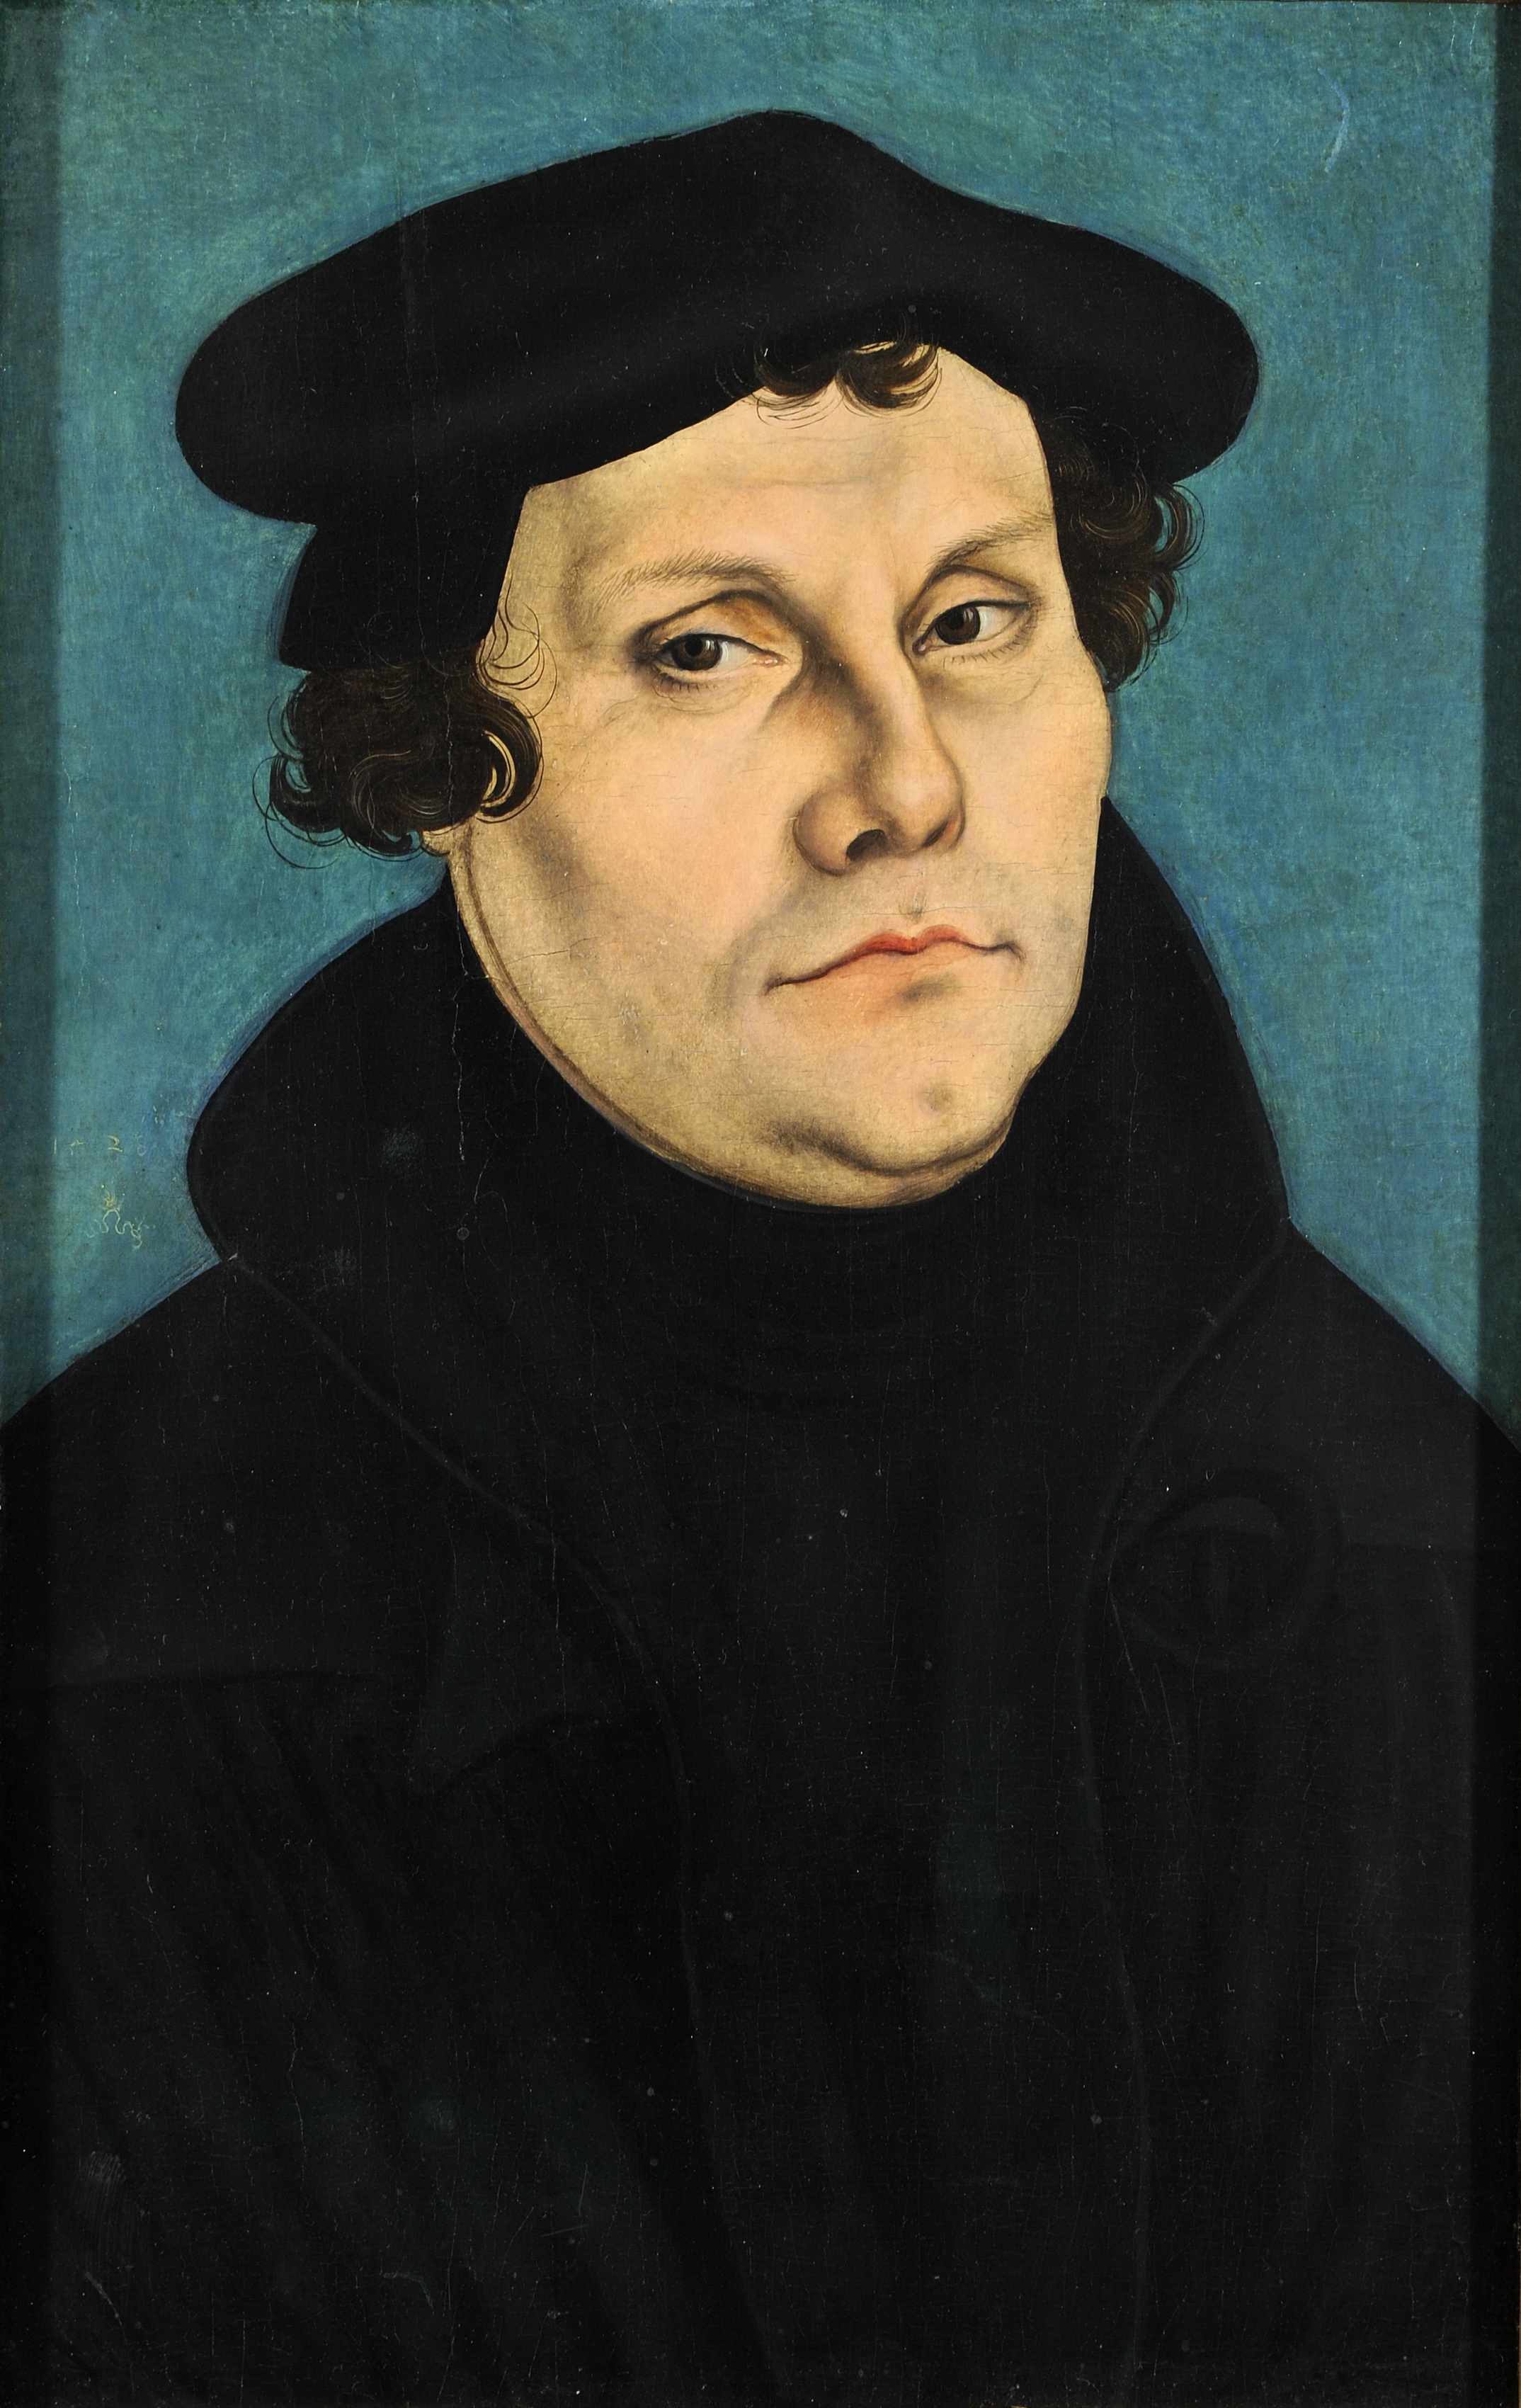 Lucas Cranach d.Ä. - Martin Luther, 1528 (Veste Coburg).jpg